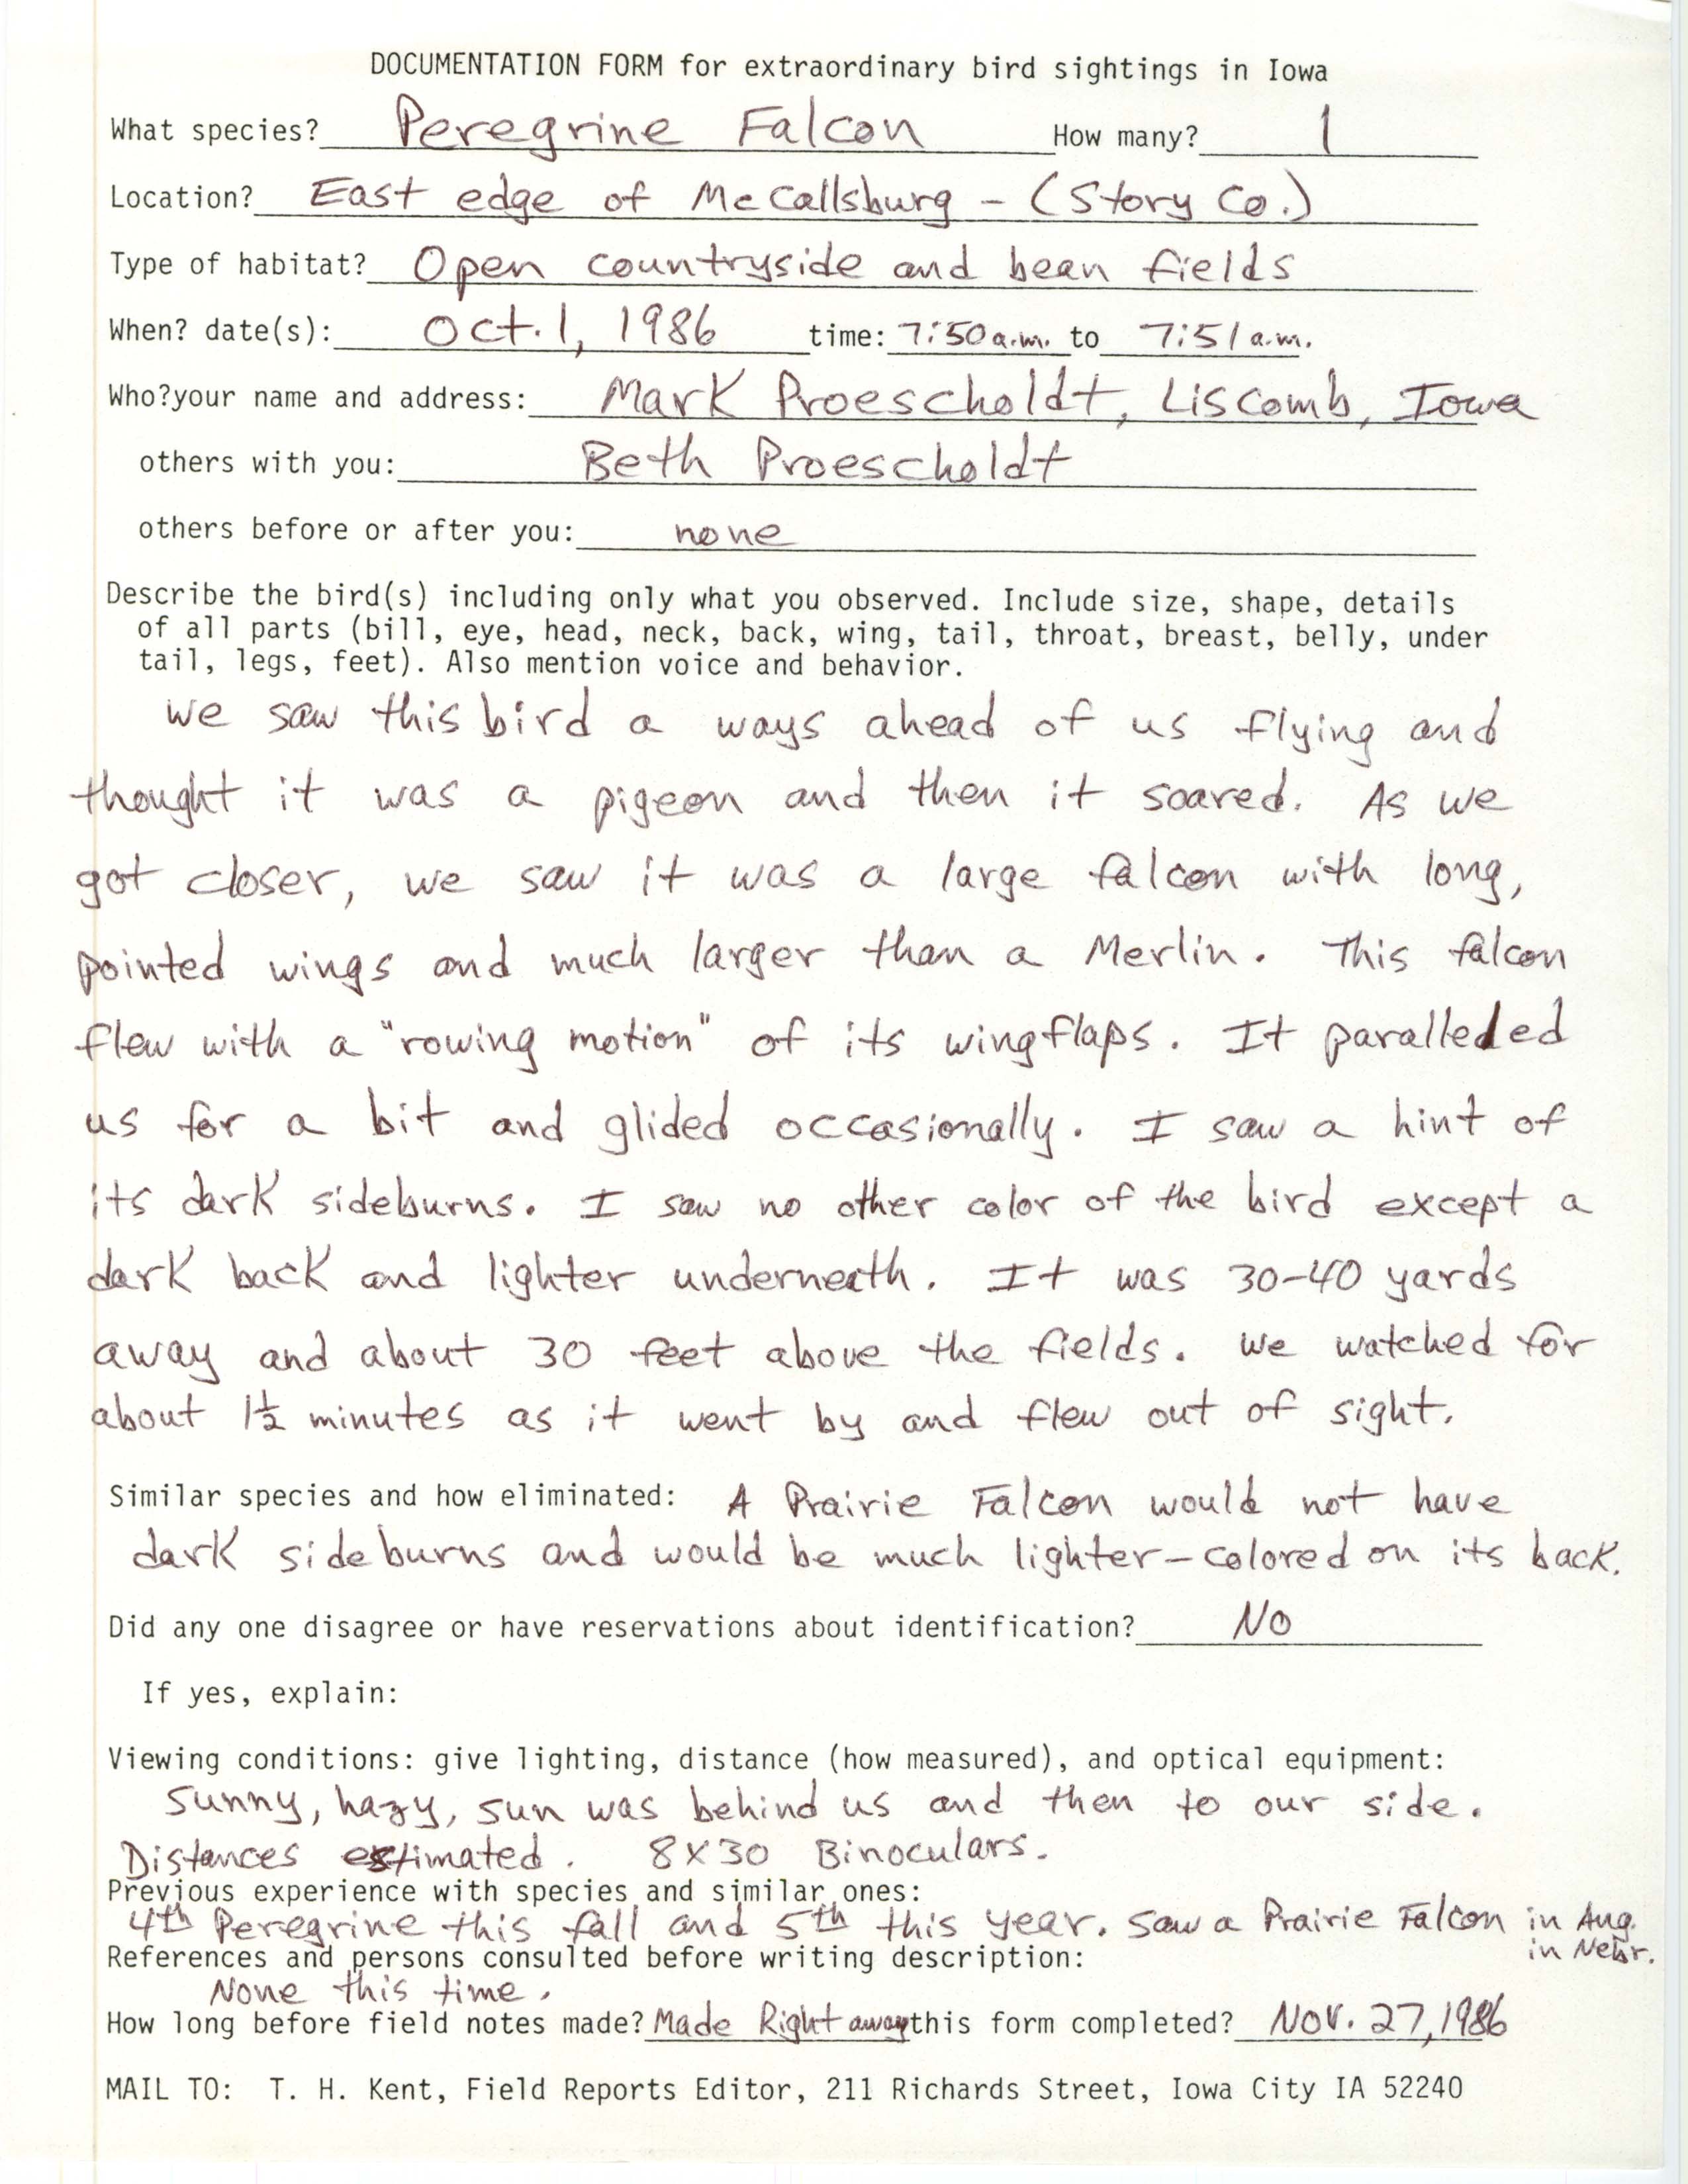 Rare bird documentation form for Peregrine Falcon at McCallsburg in 1986